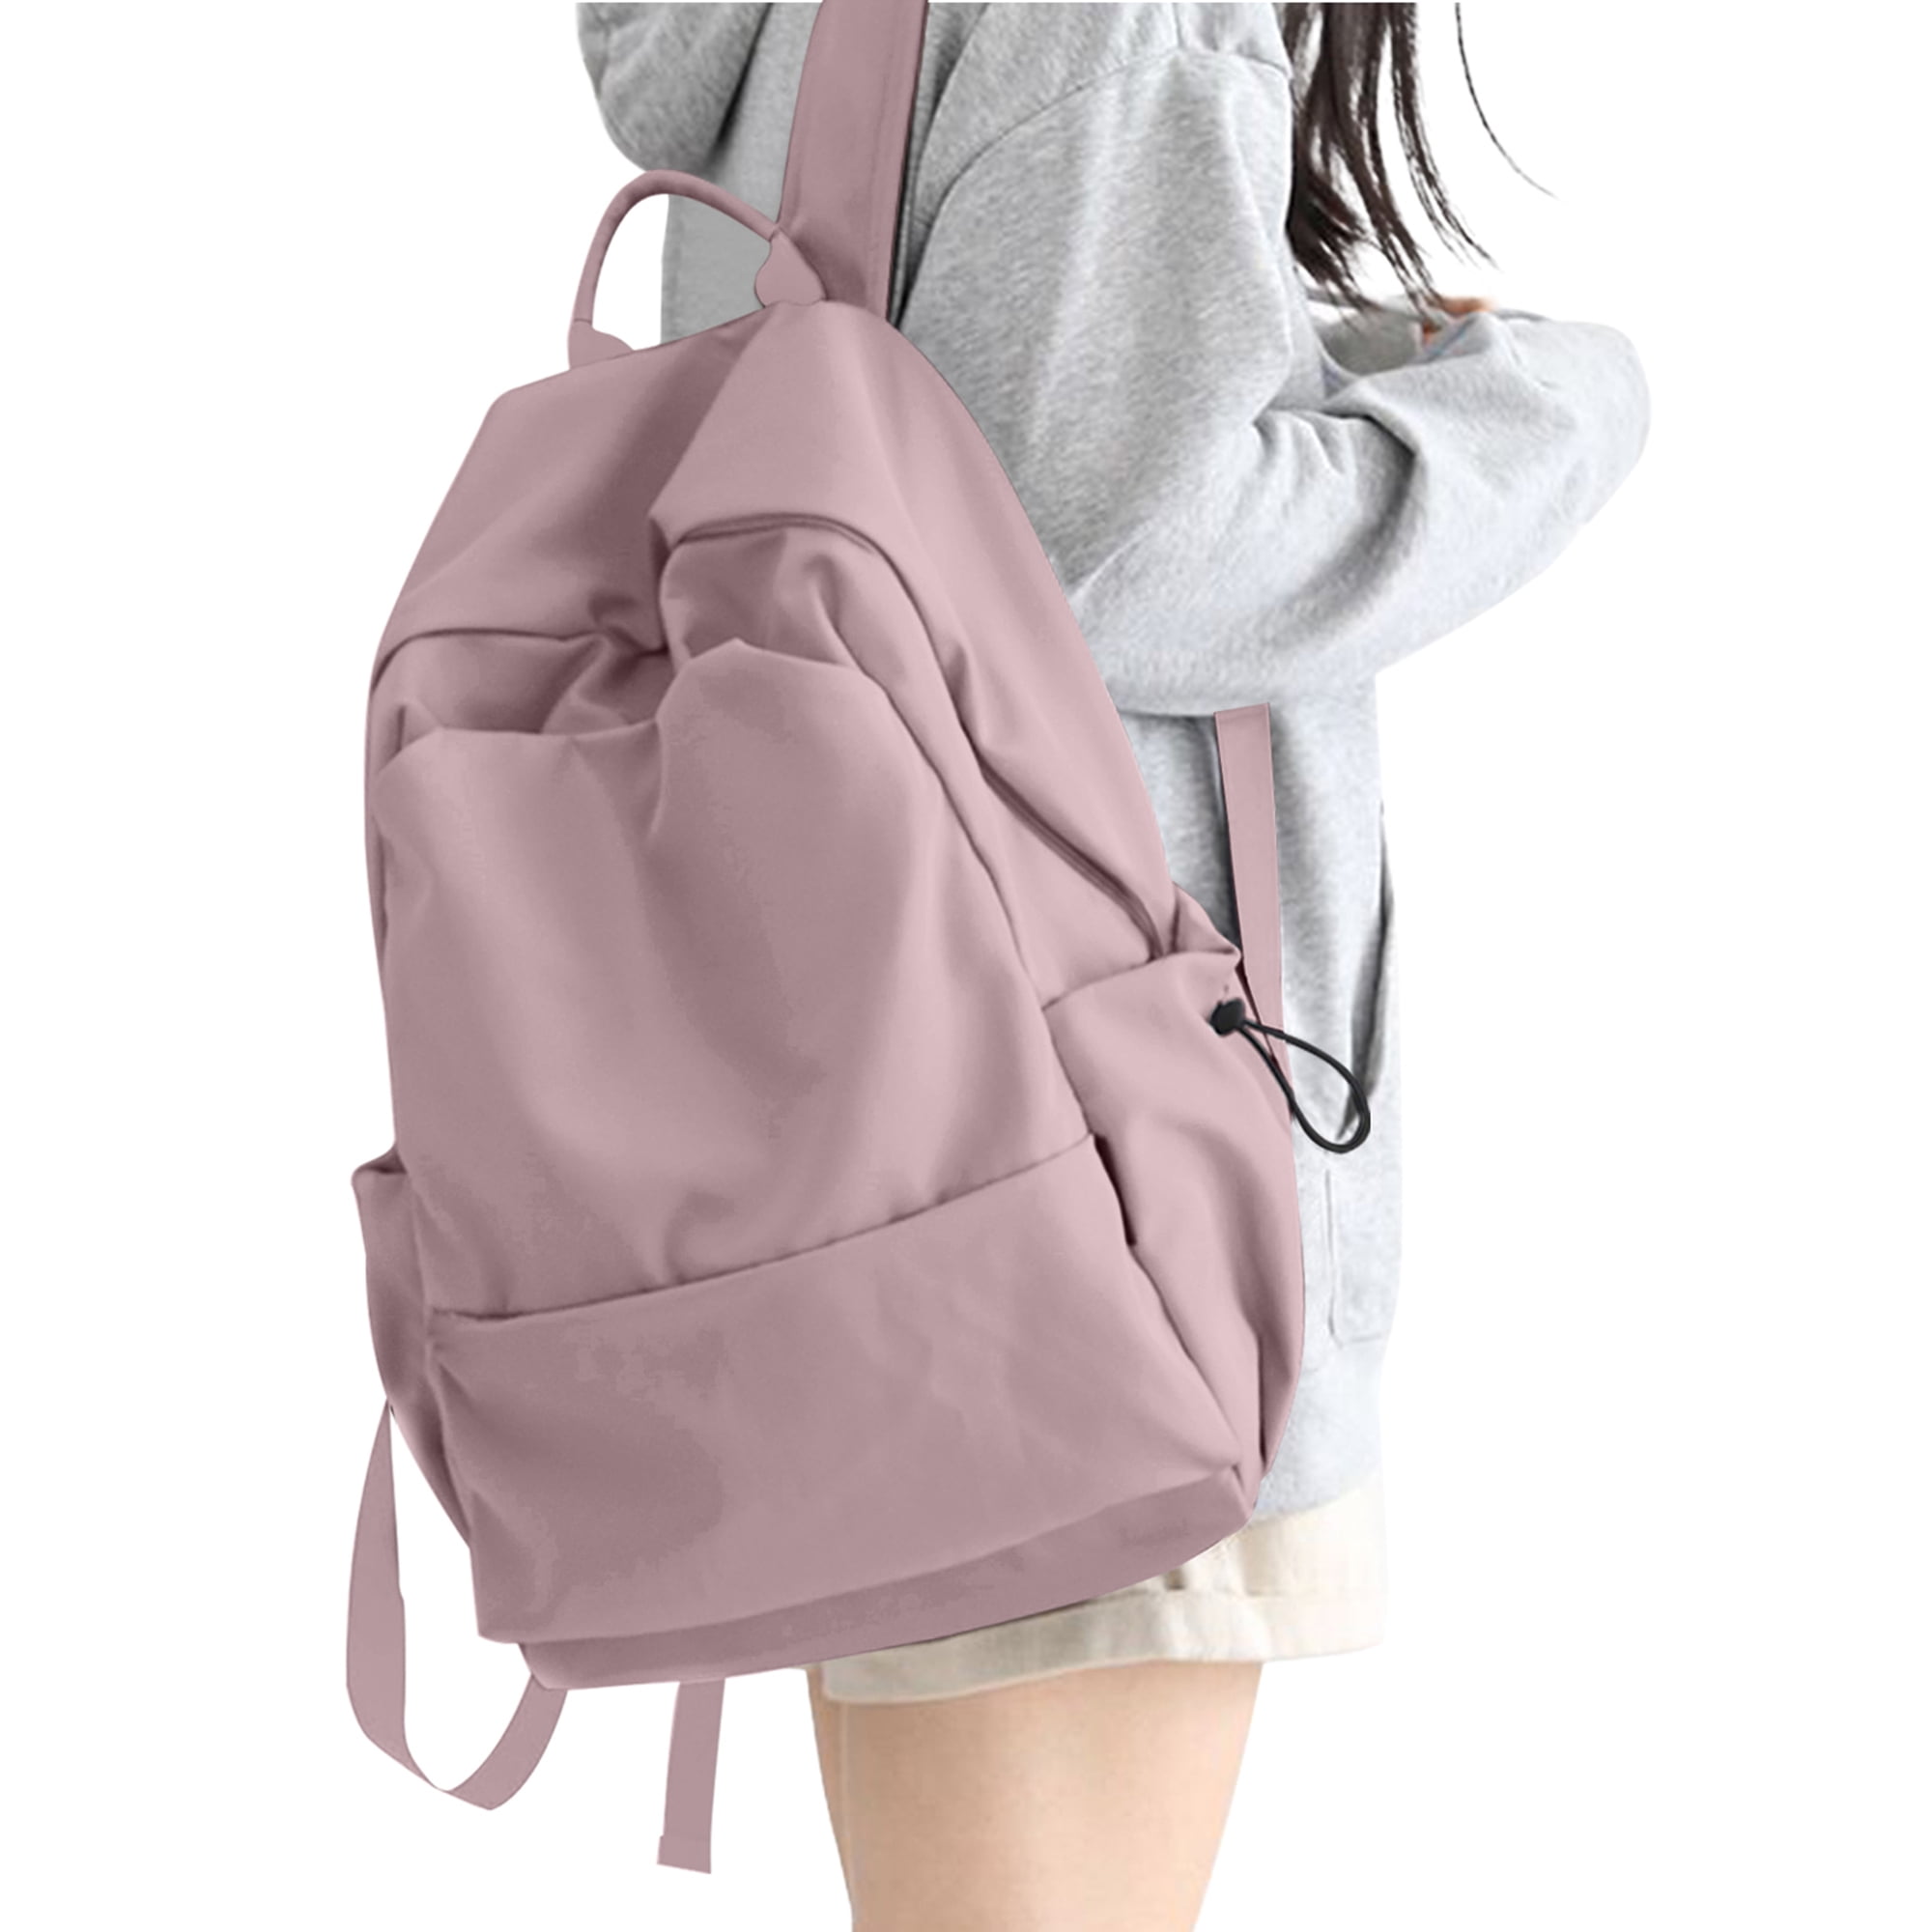 Female College Student Light Casual School Bag High-value Outdoor  Waterproof Travel Backpack Mochila Escolar Niña